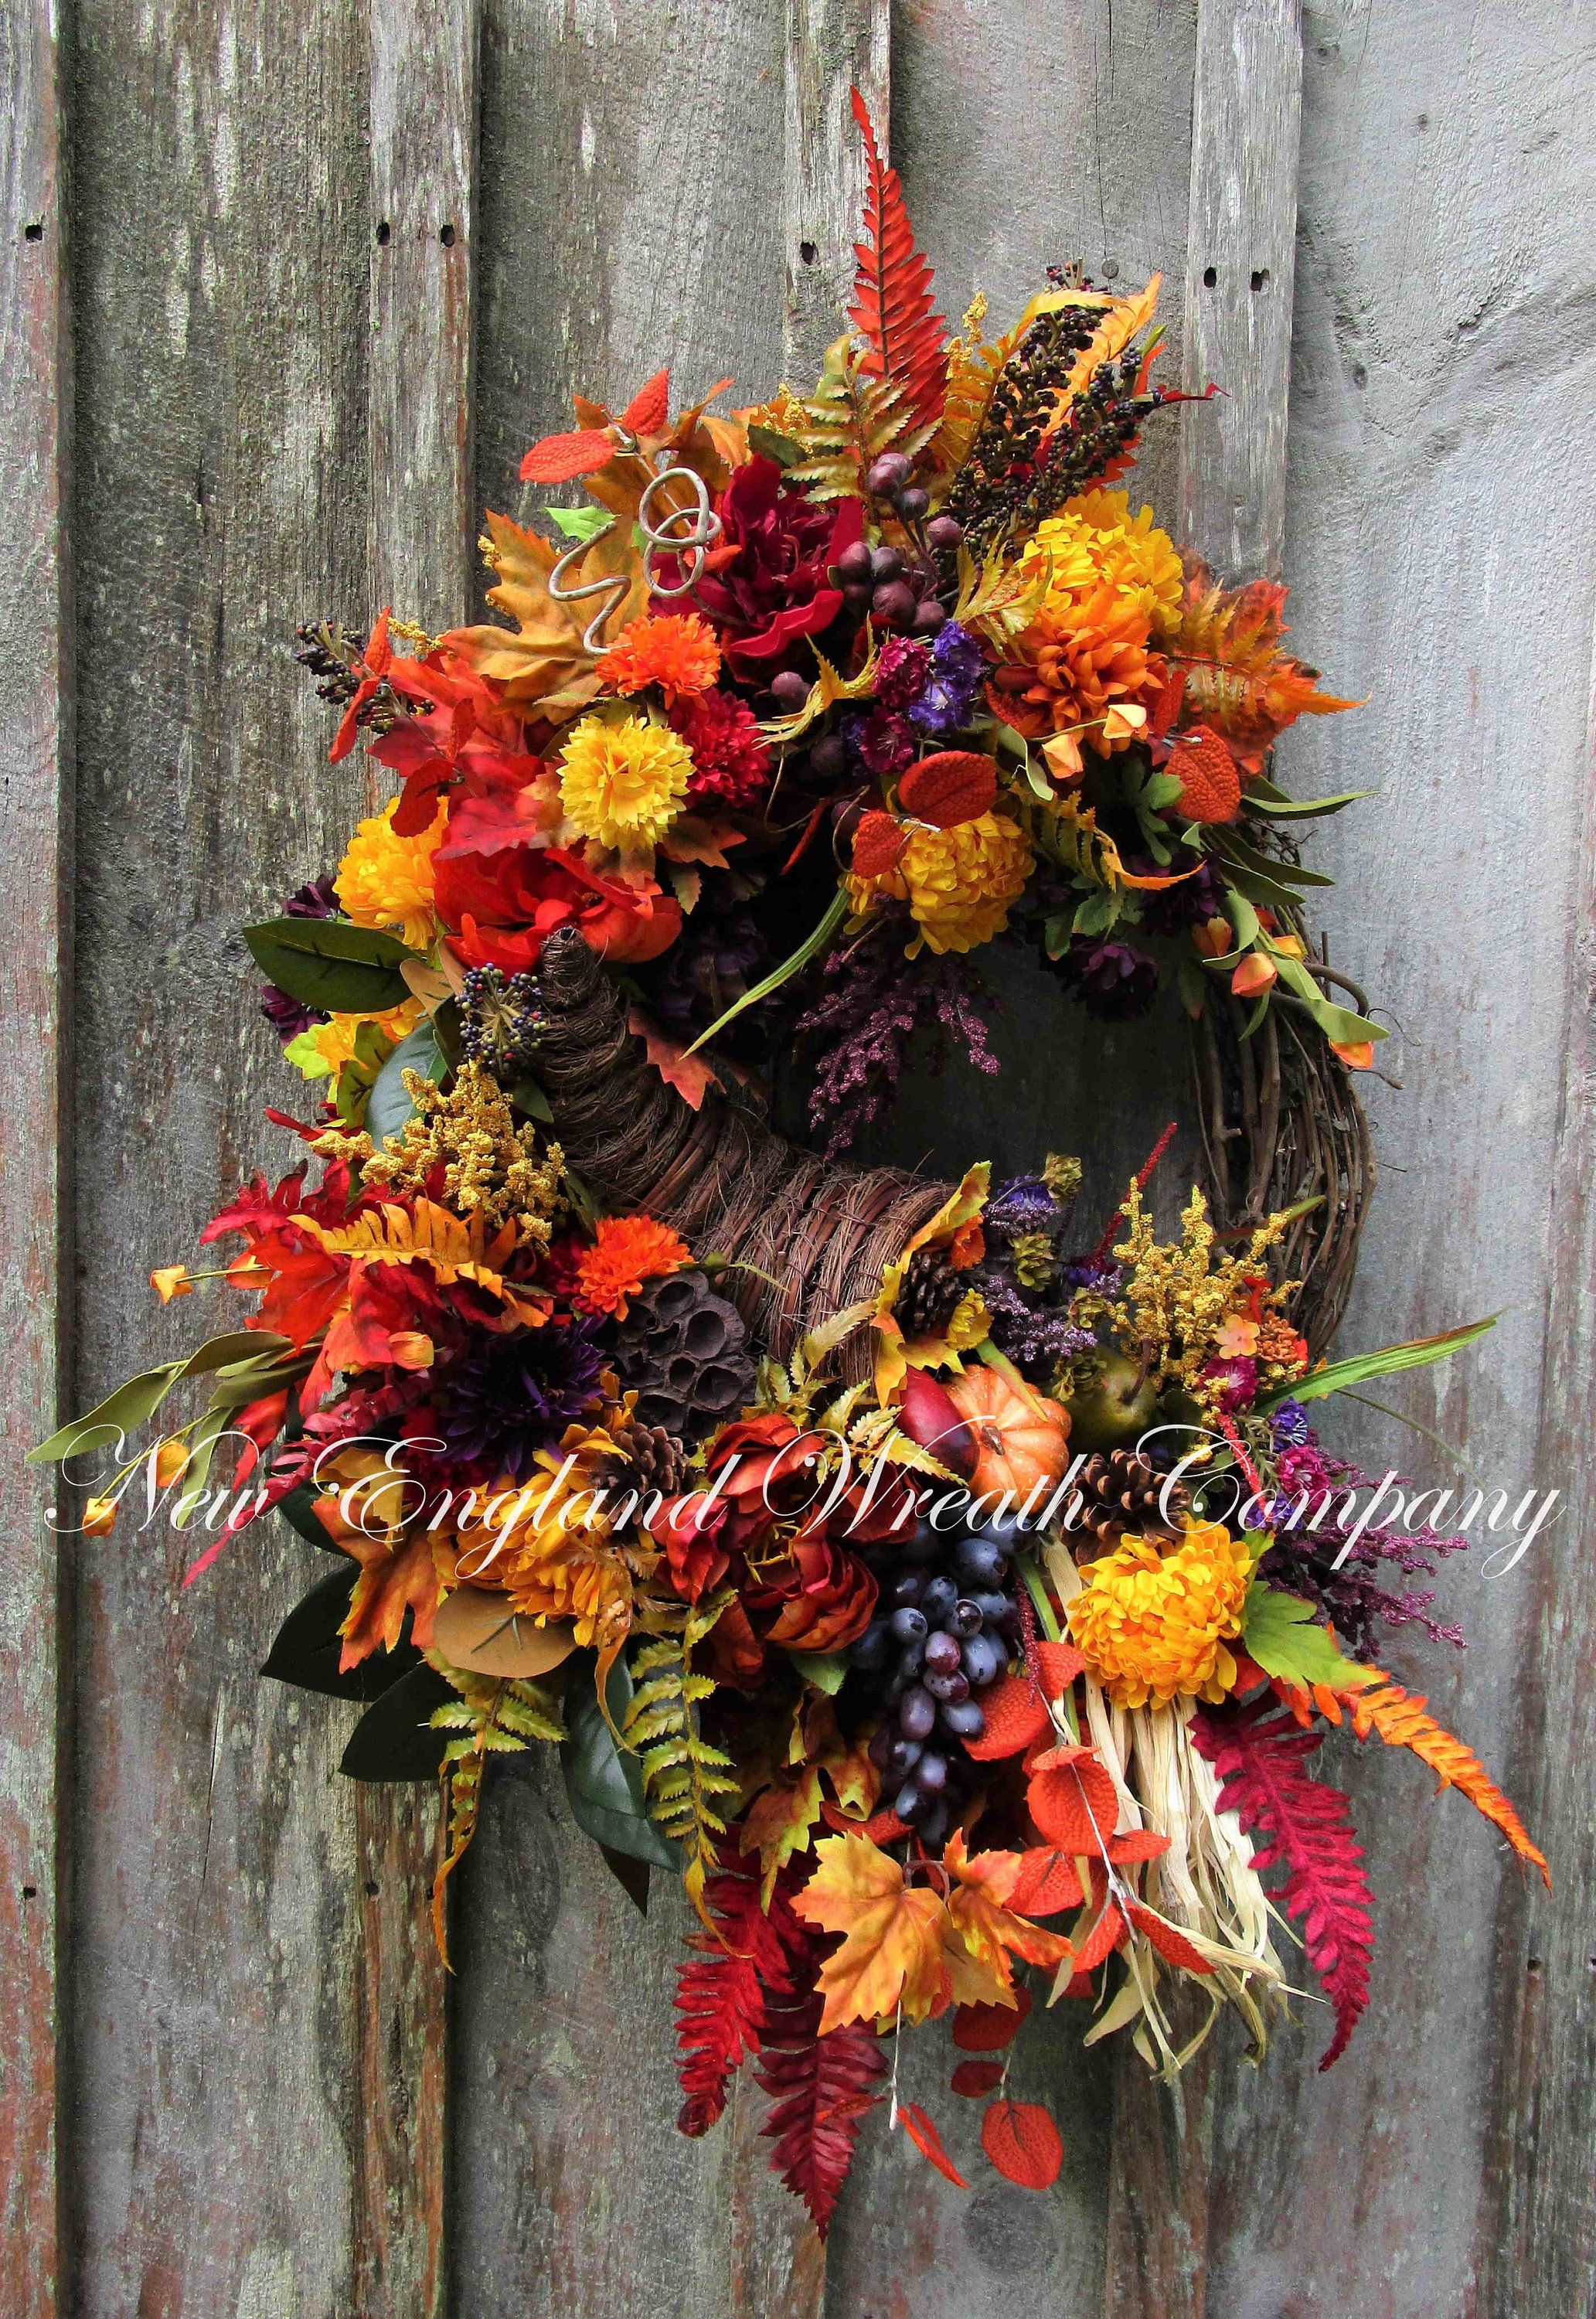 Large Wreaths for Above Fireplace Inspirational Fall Cornucopia Wreath Autumn Wreath Thanksgiving Wreath